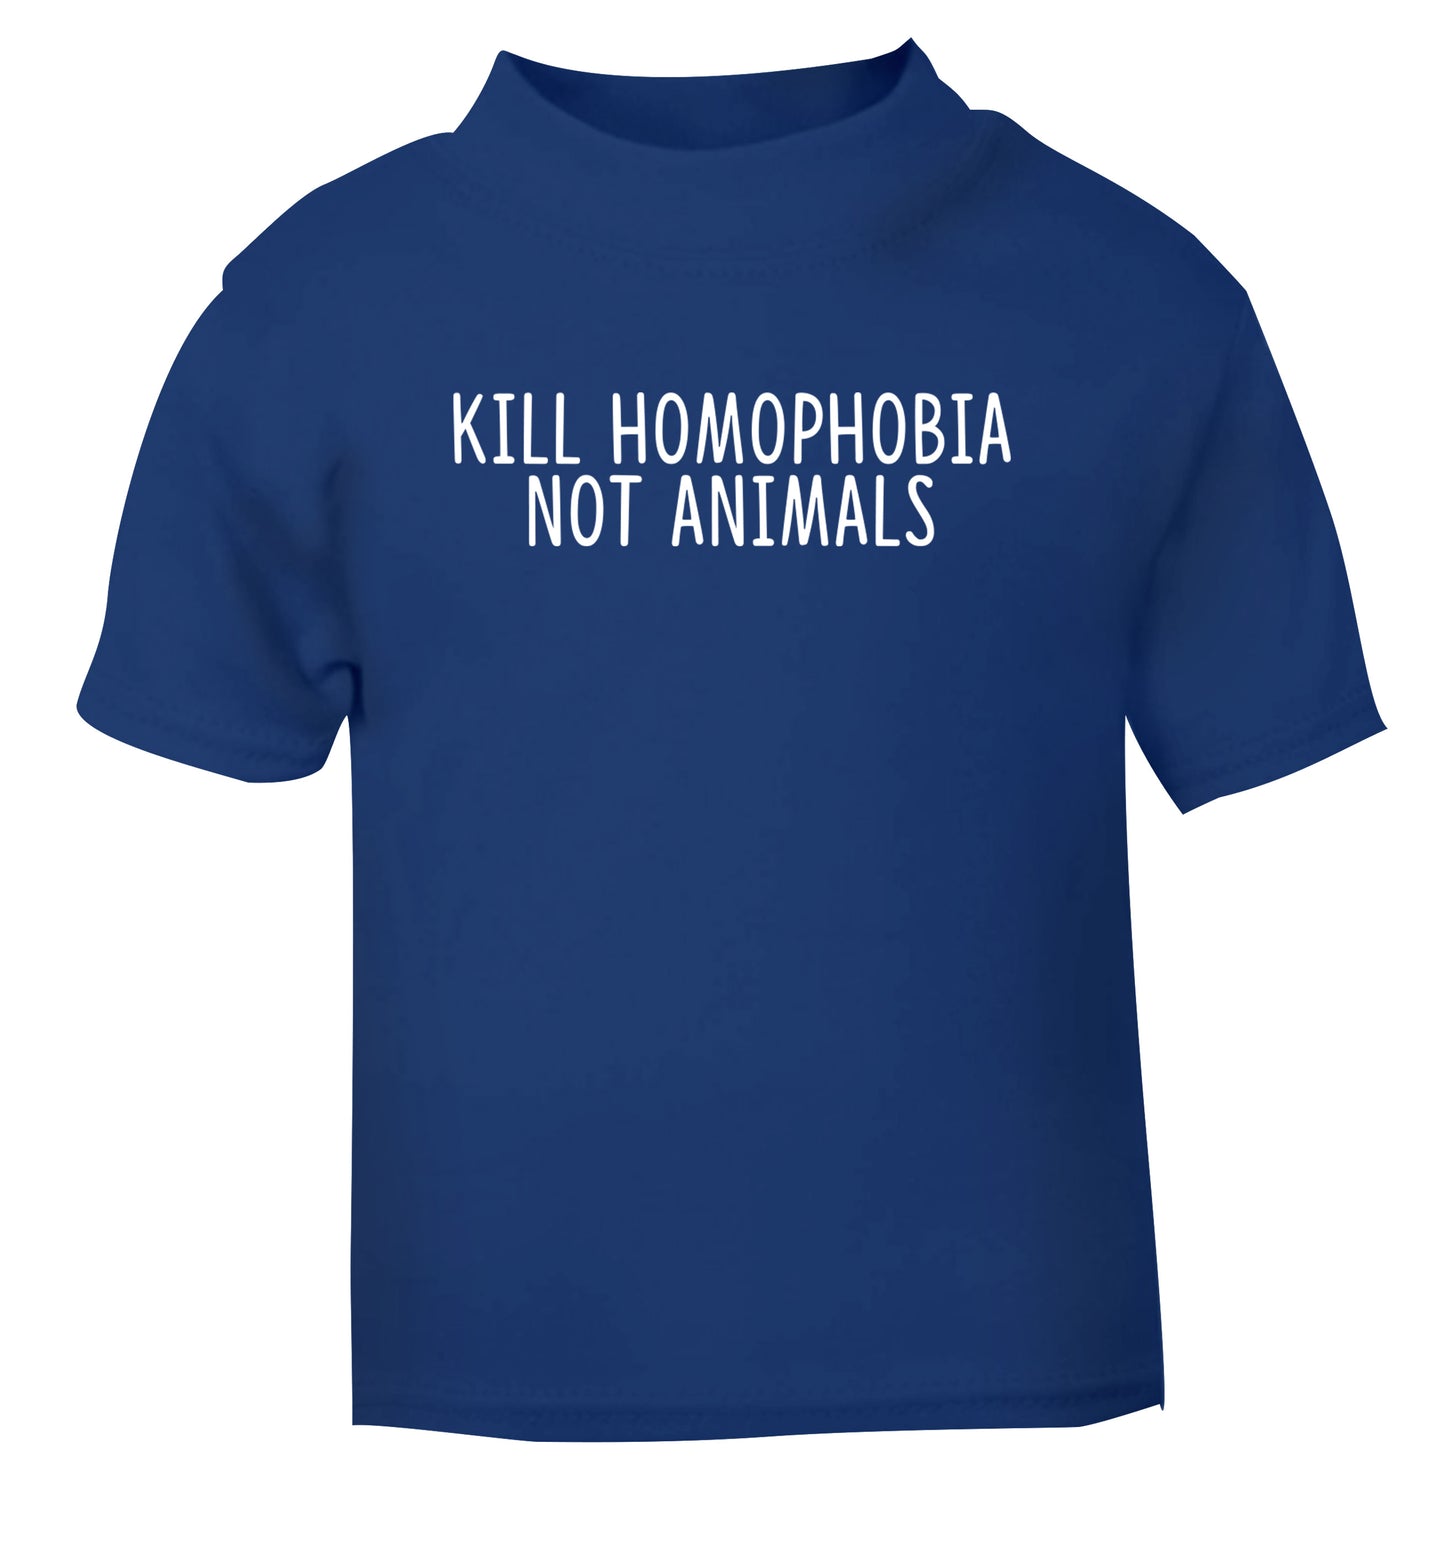 Kill Homophobia Not Animals blue Baby Toddler Tshirt 2 Years